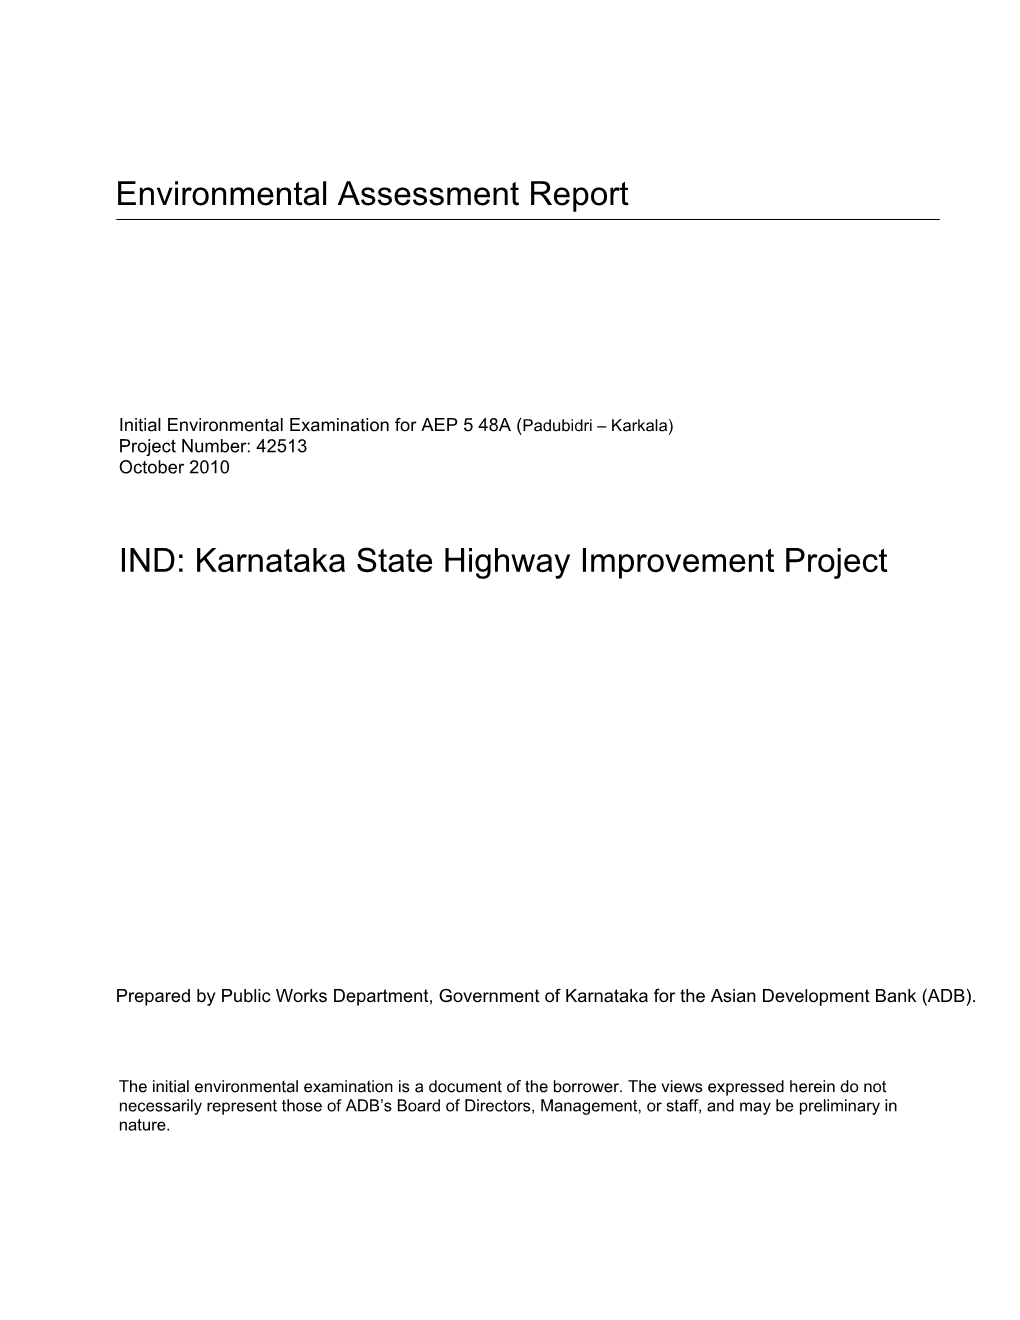 IND: Karnataka State Highway Improvement Project